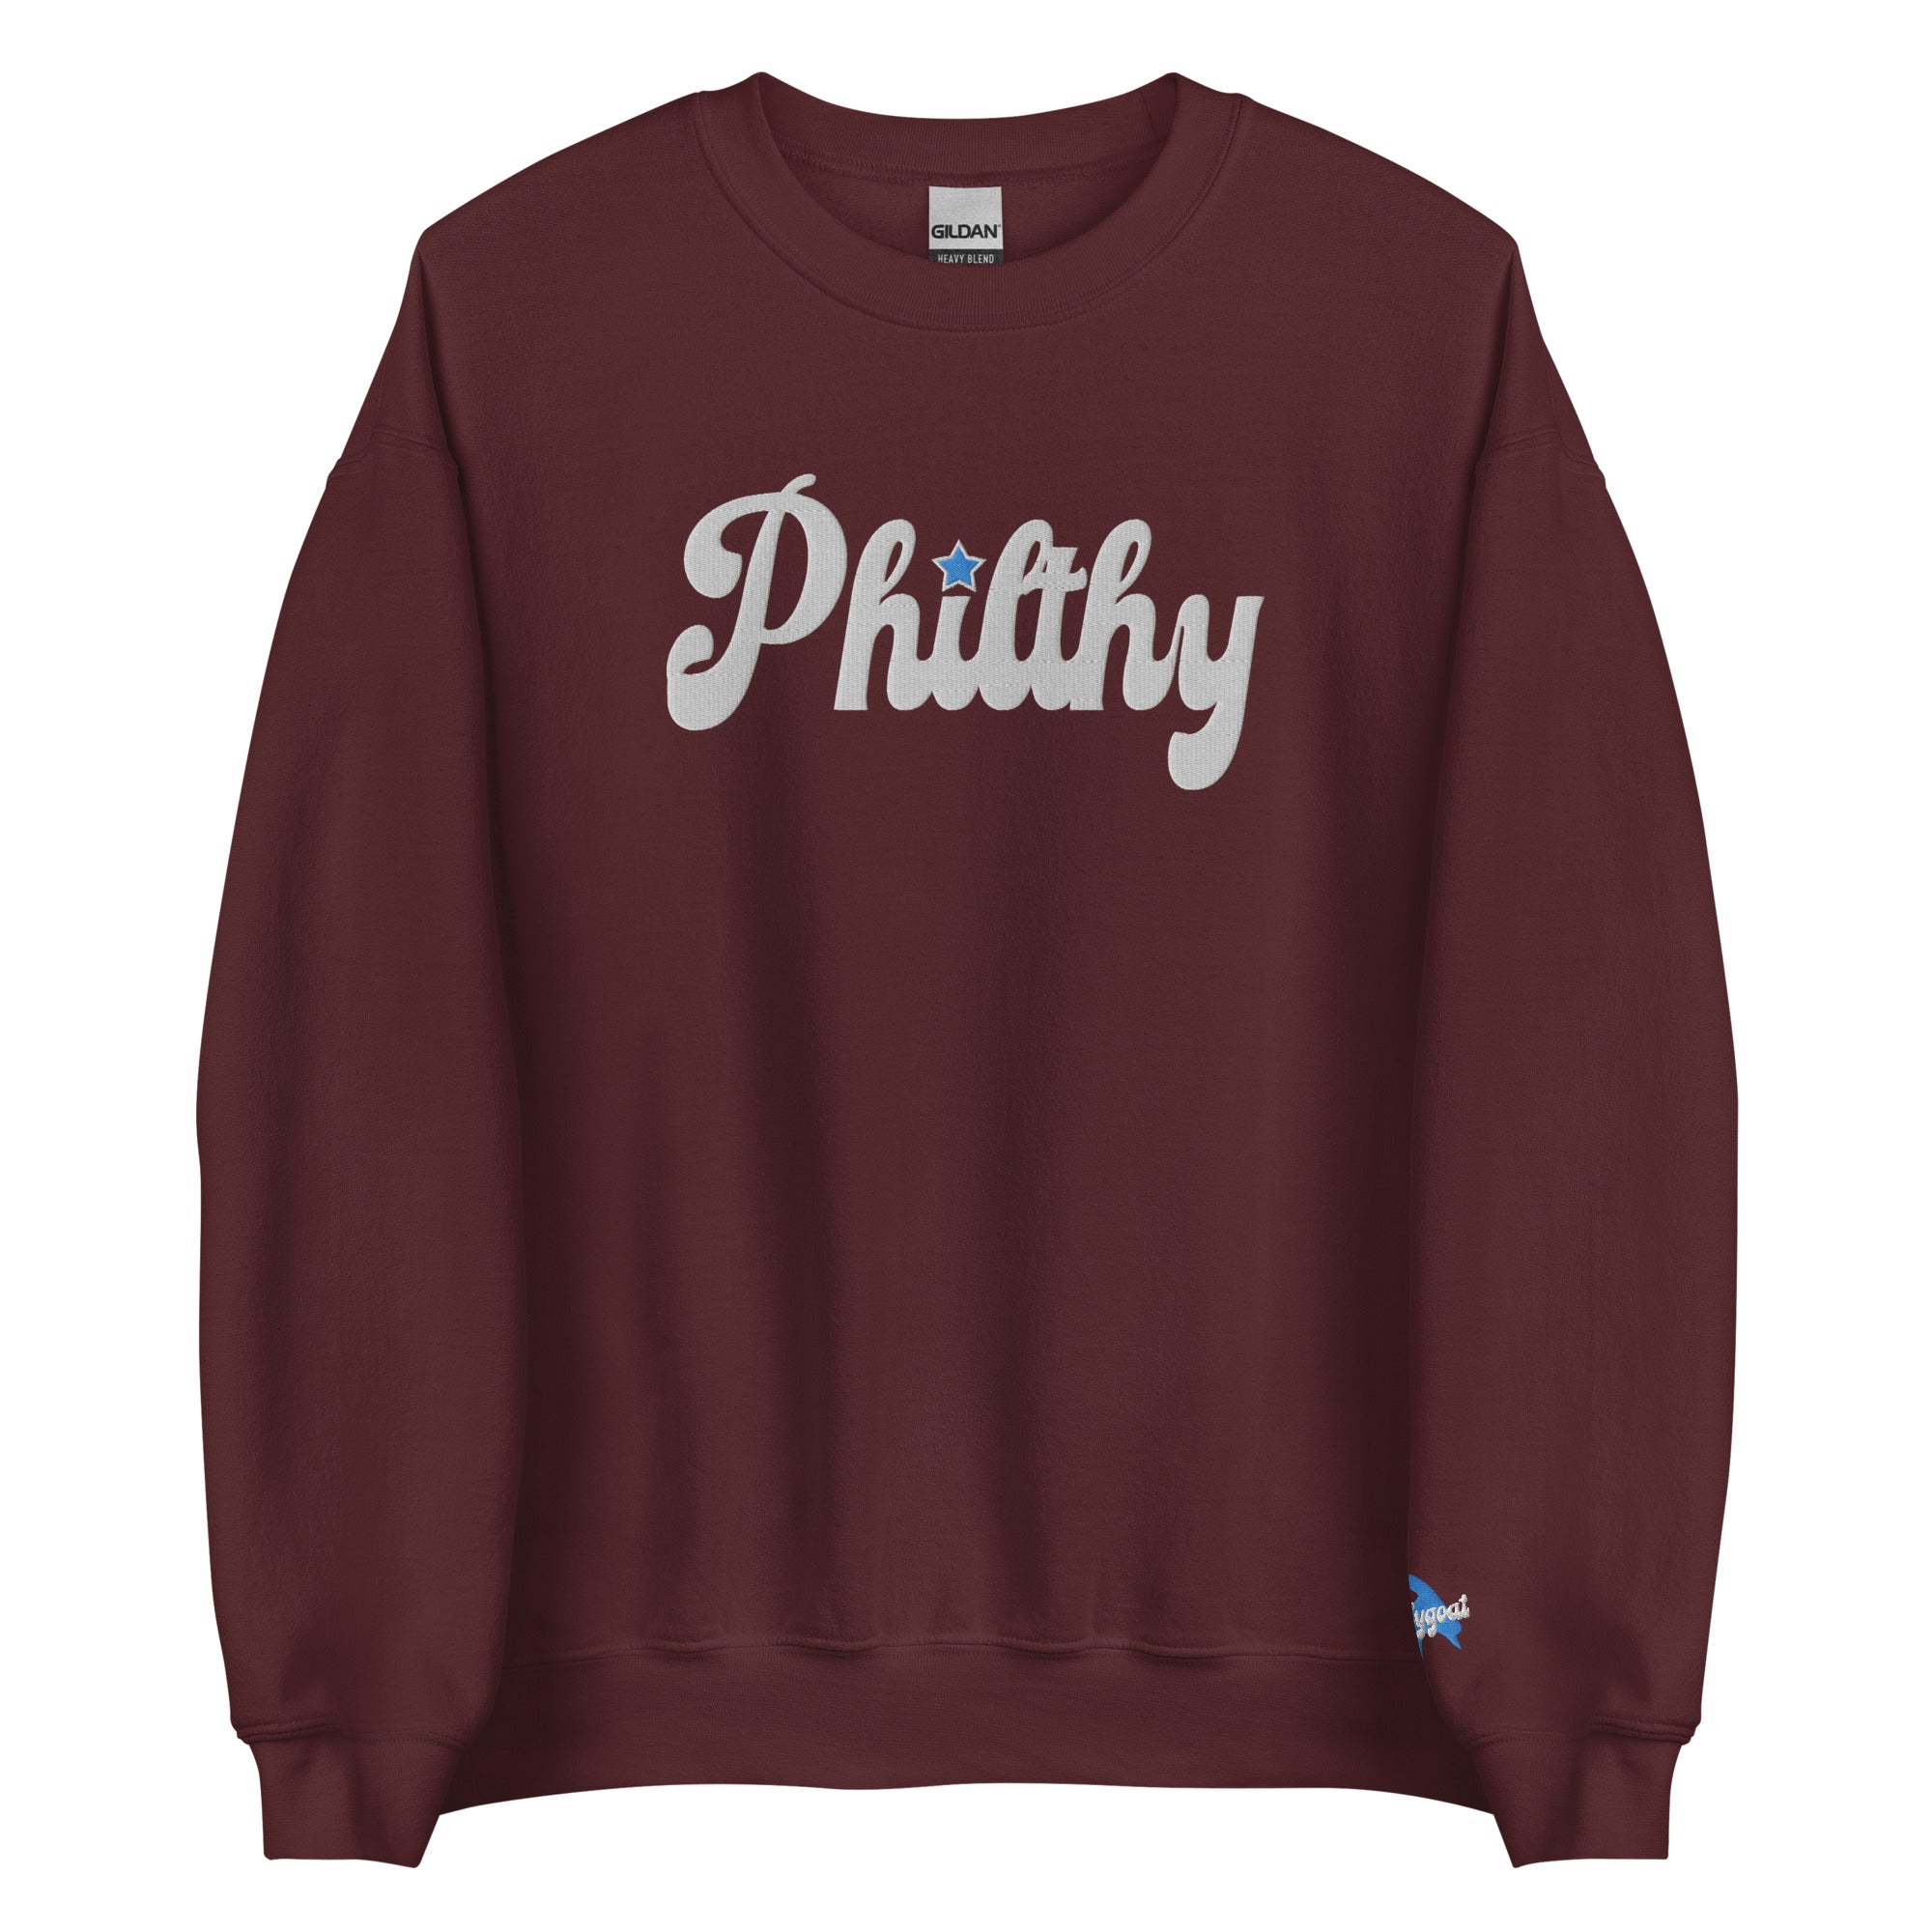 "Philthy" Embroidered Sweatshirt